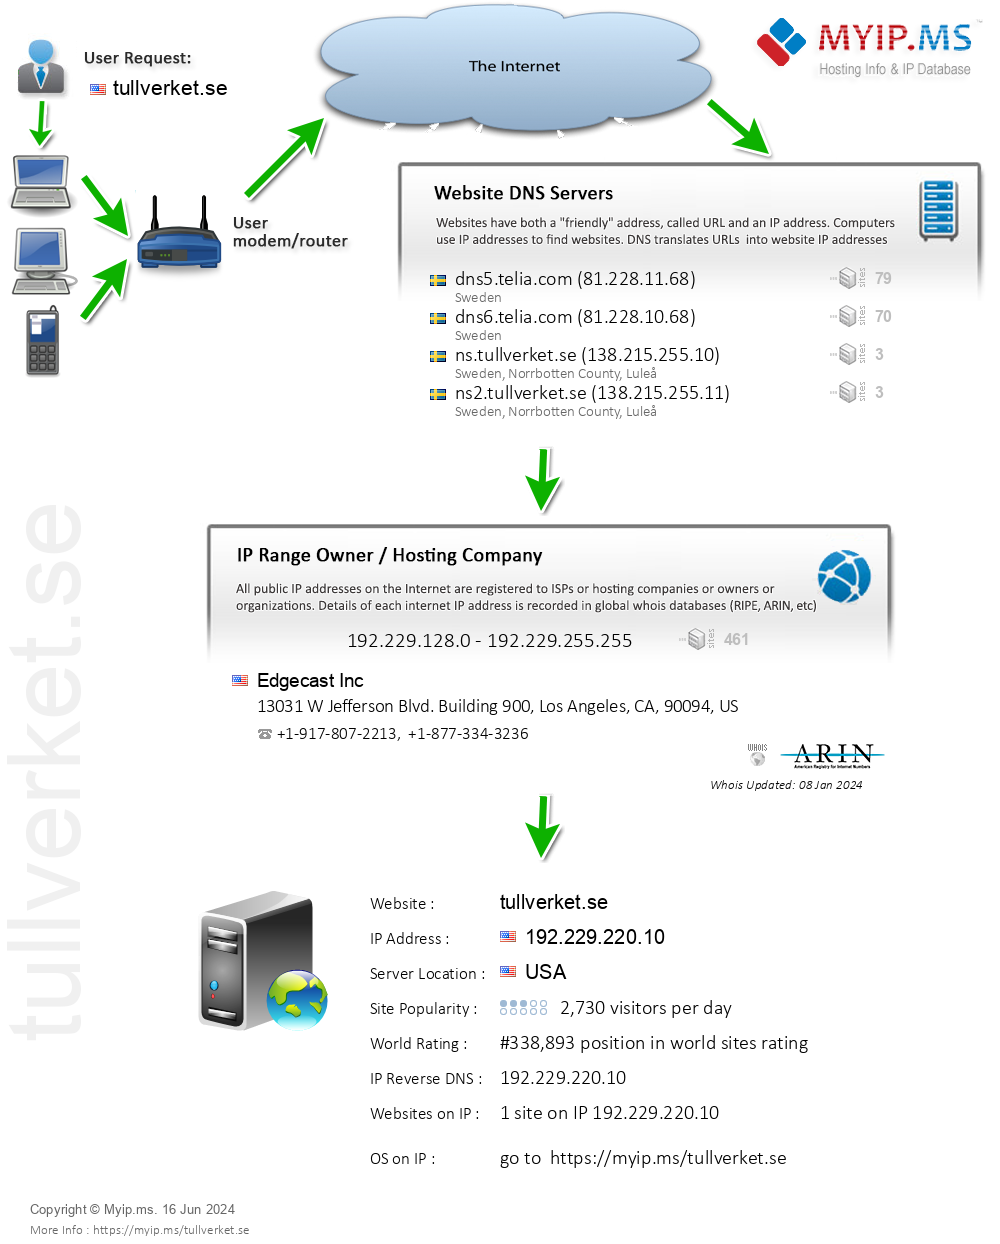 Tullverket.se - Website Hosting Visual IP Diagram